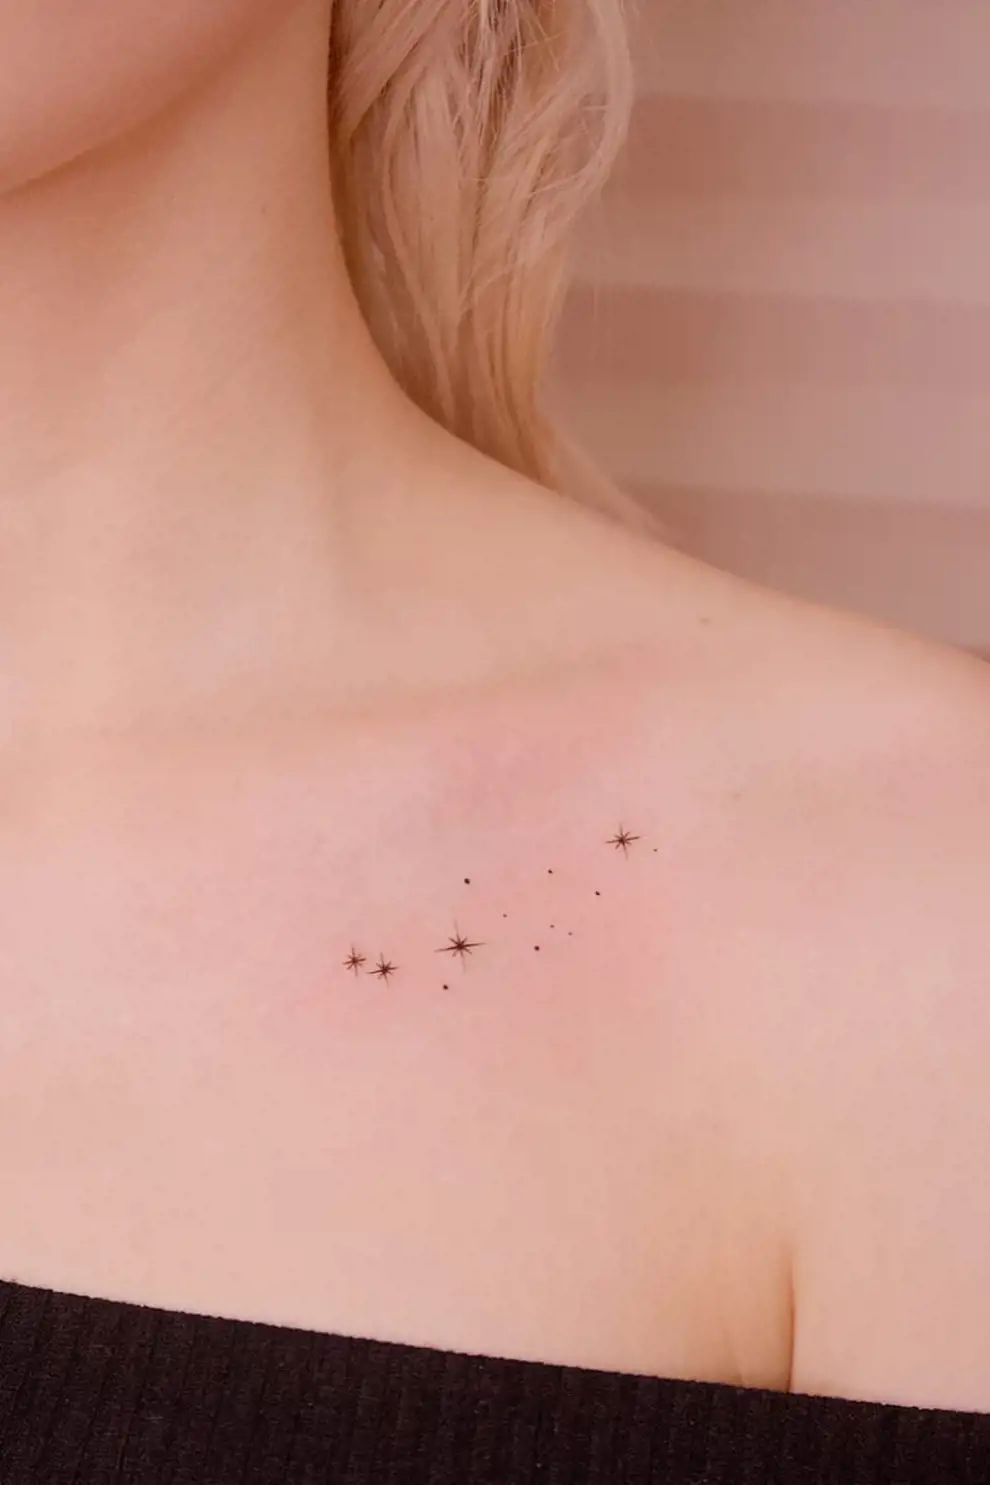 Tatuajes pequeños para mujer: destellos